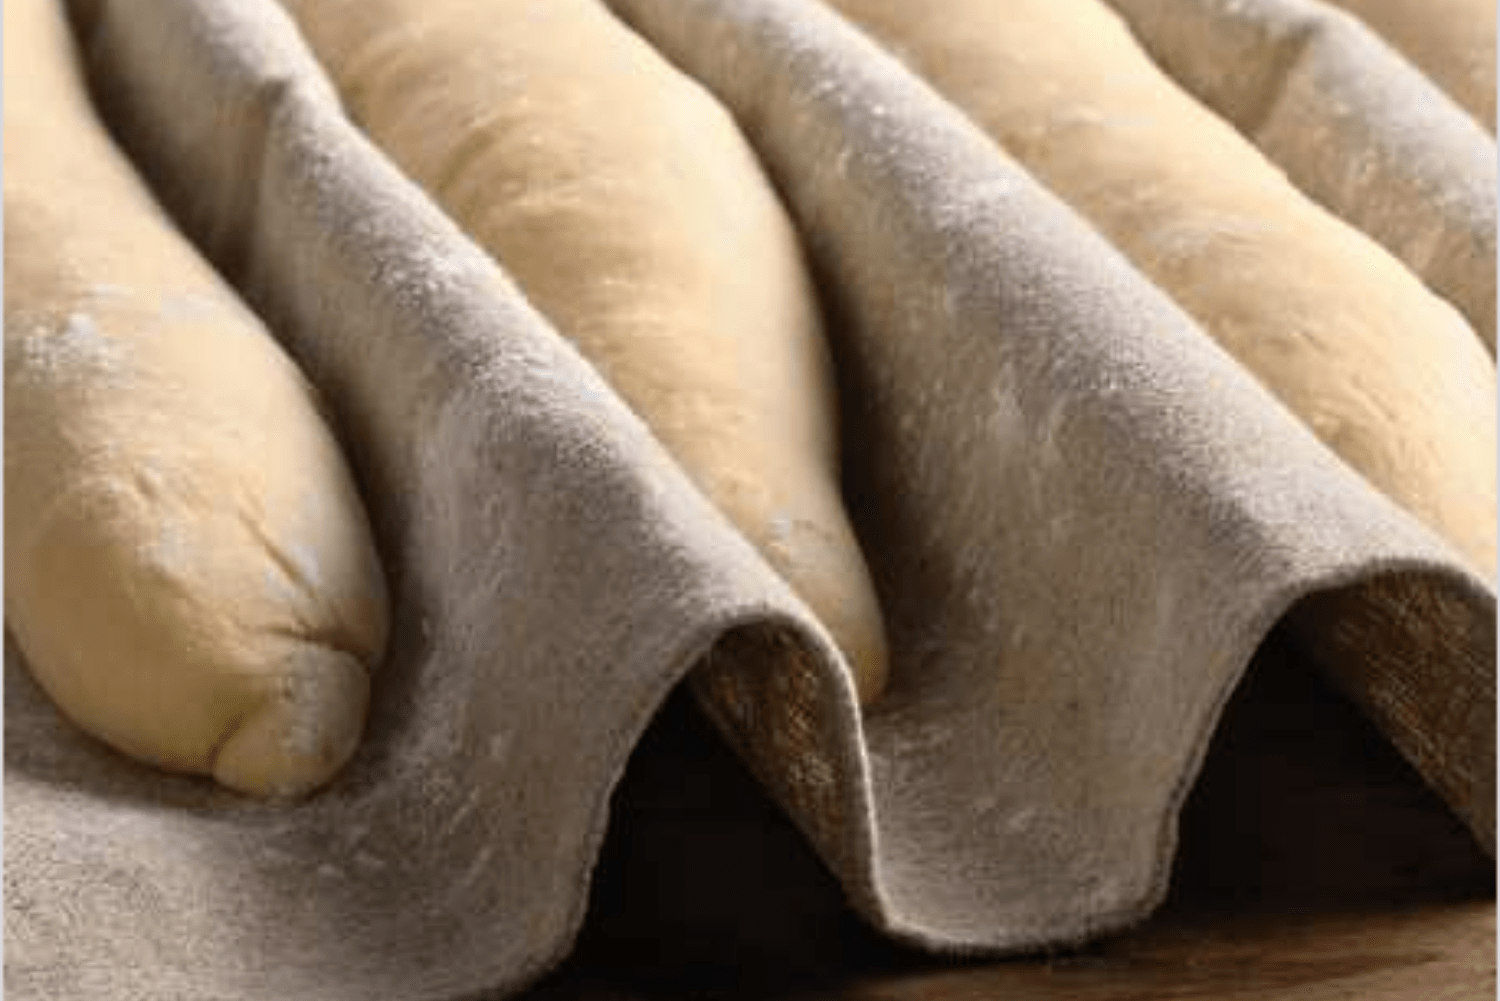 Bread Lame Australia  Bread Scoring Tools Online - Banneton Man